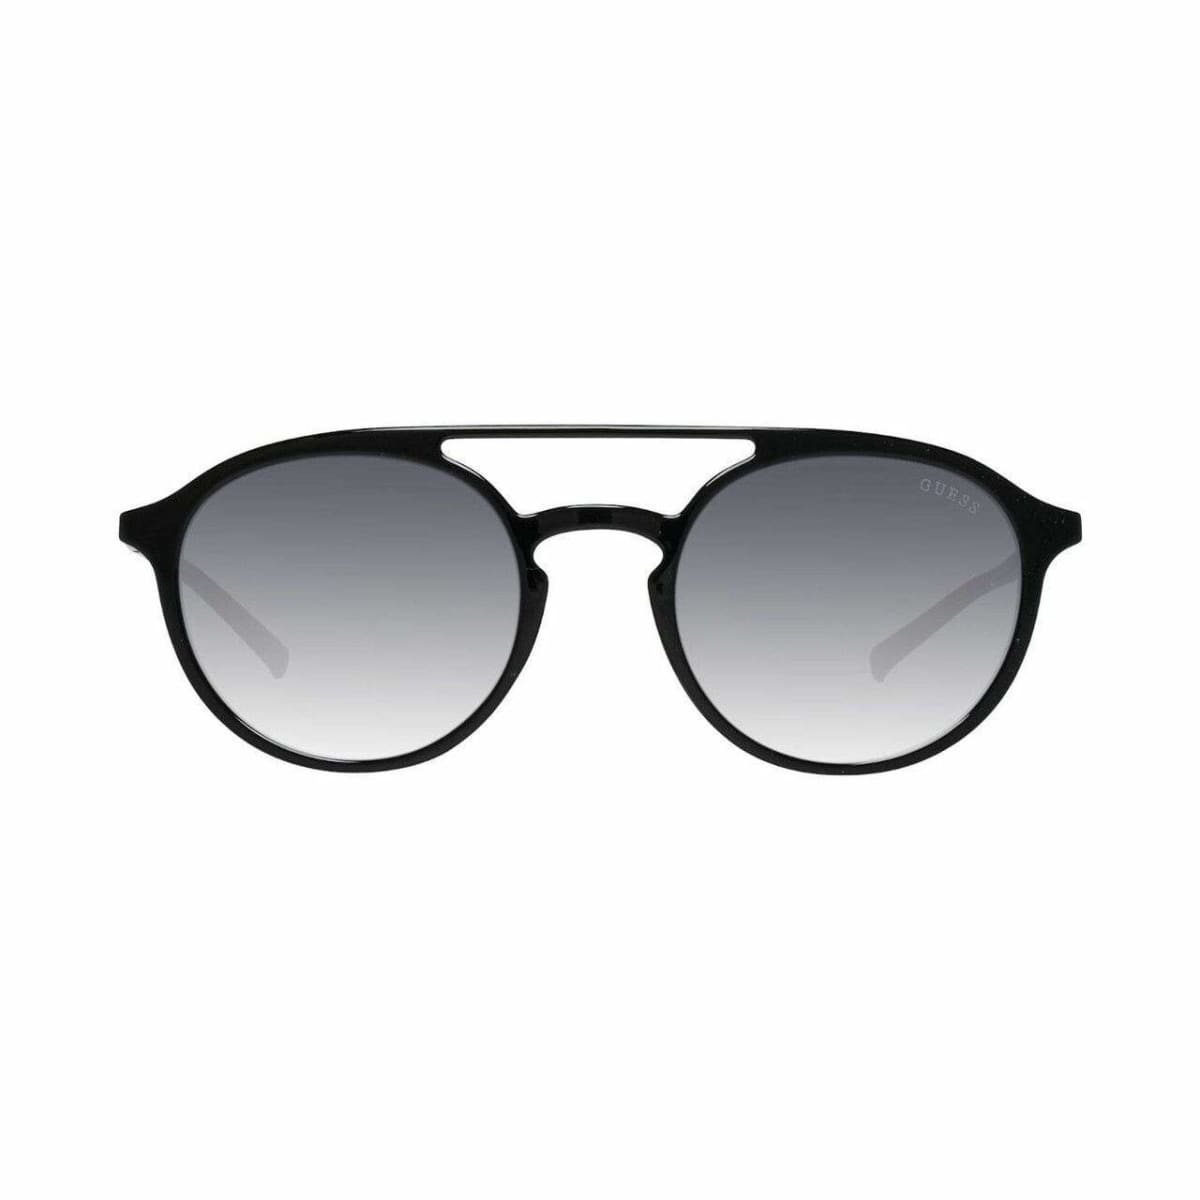 Guess GU3033/S-01B Shiny Black Round Gradient Smoke Lens Unisex Sunglasses - image 3 of 4